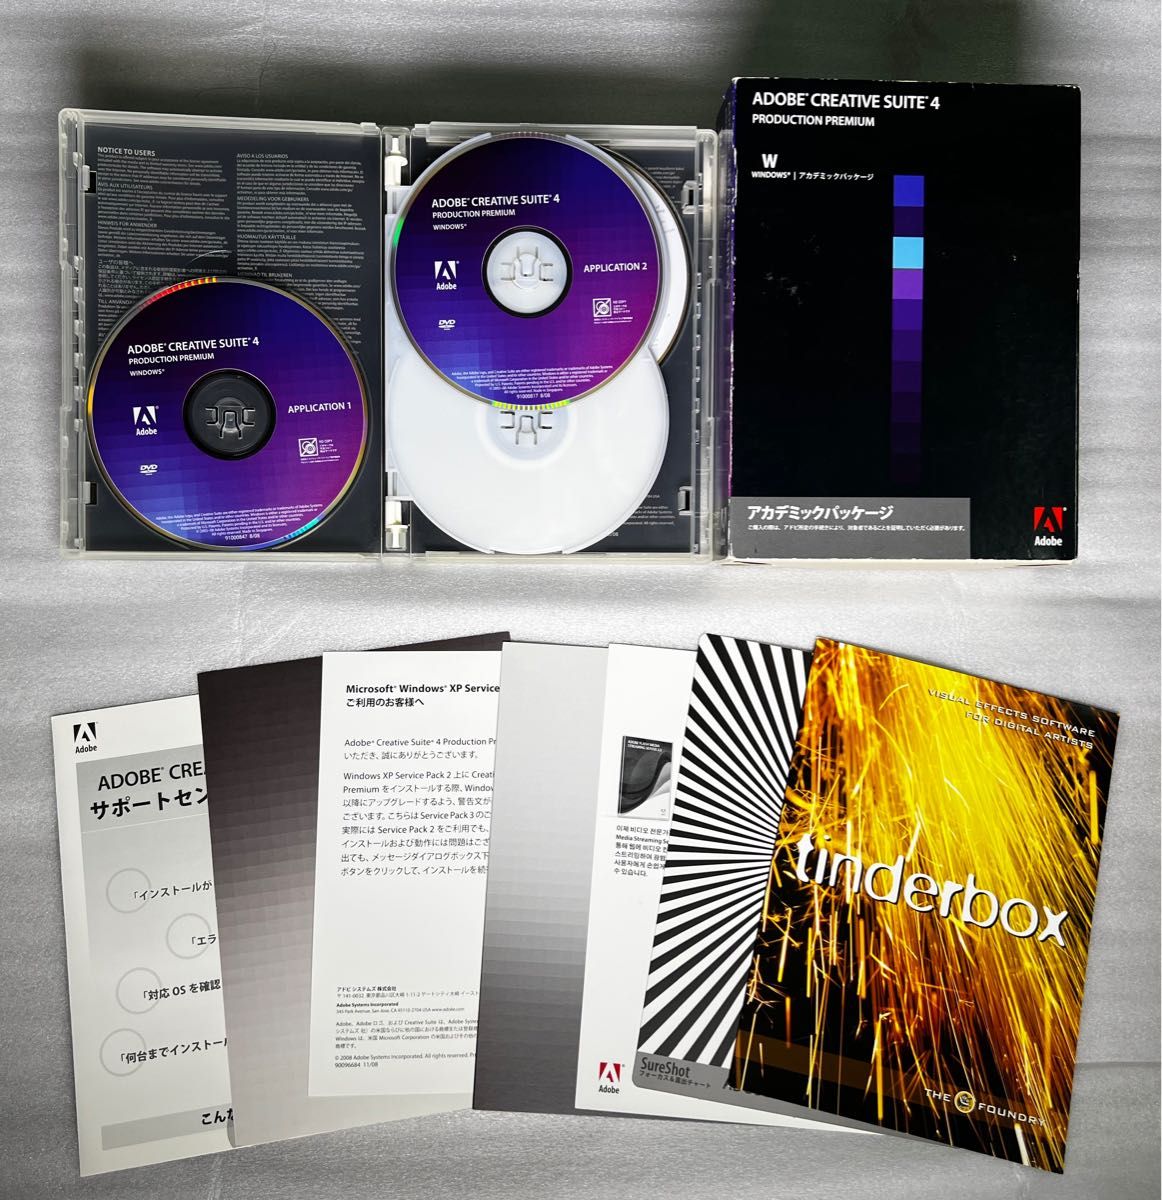 Adobe Creative Suite 4 Production Premium 日本語版 Windows版